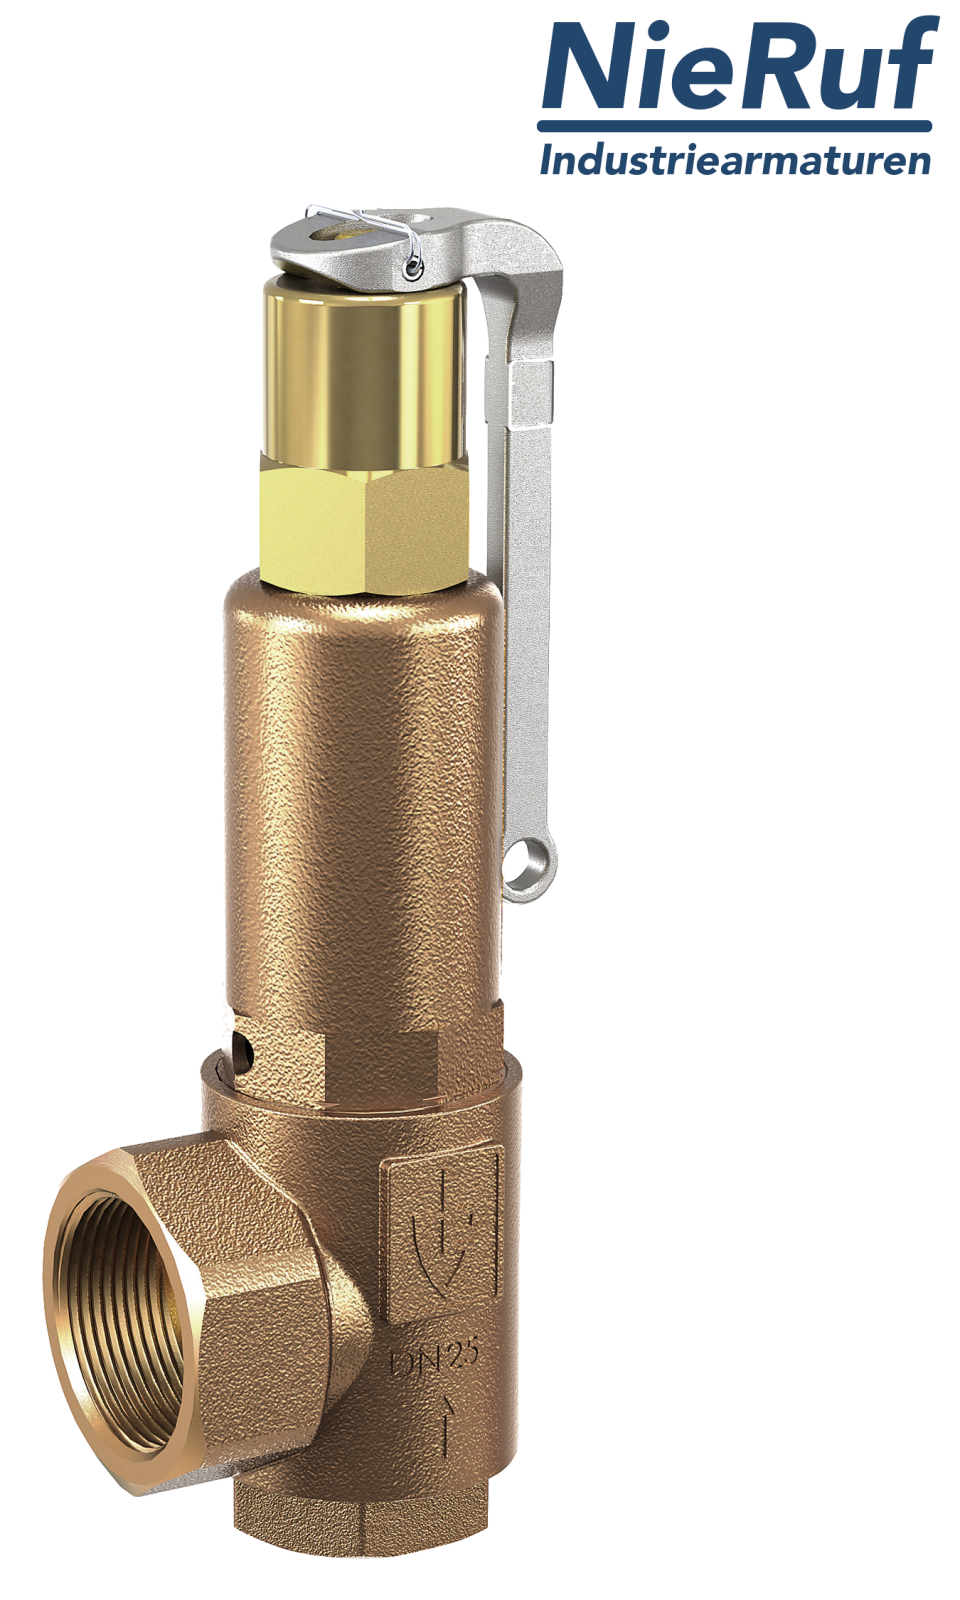 safety valve 1 1/2" x 2" fm SV07 neutral gaseous media, gunmetal FKM, with lever